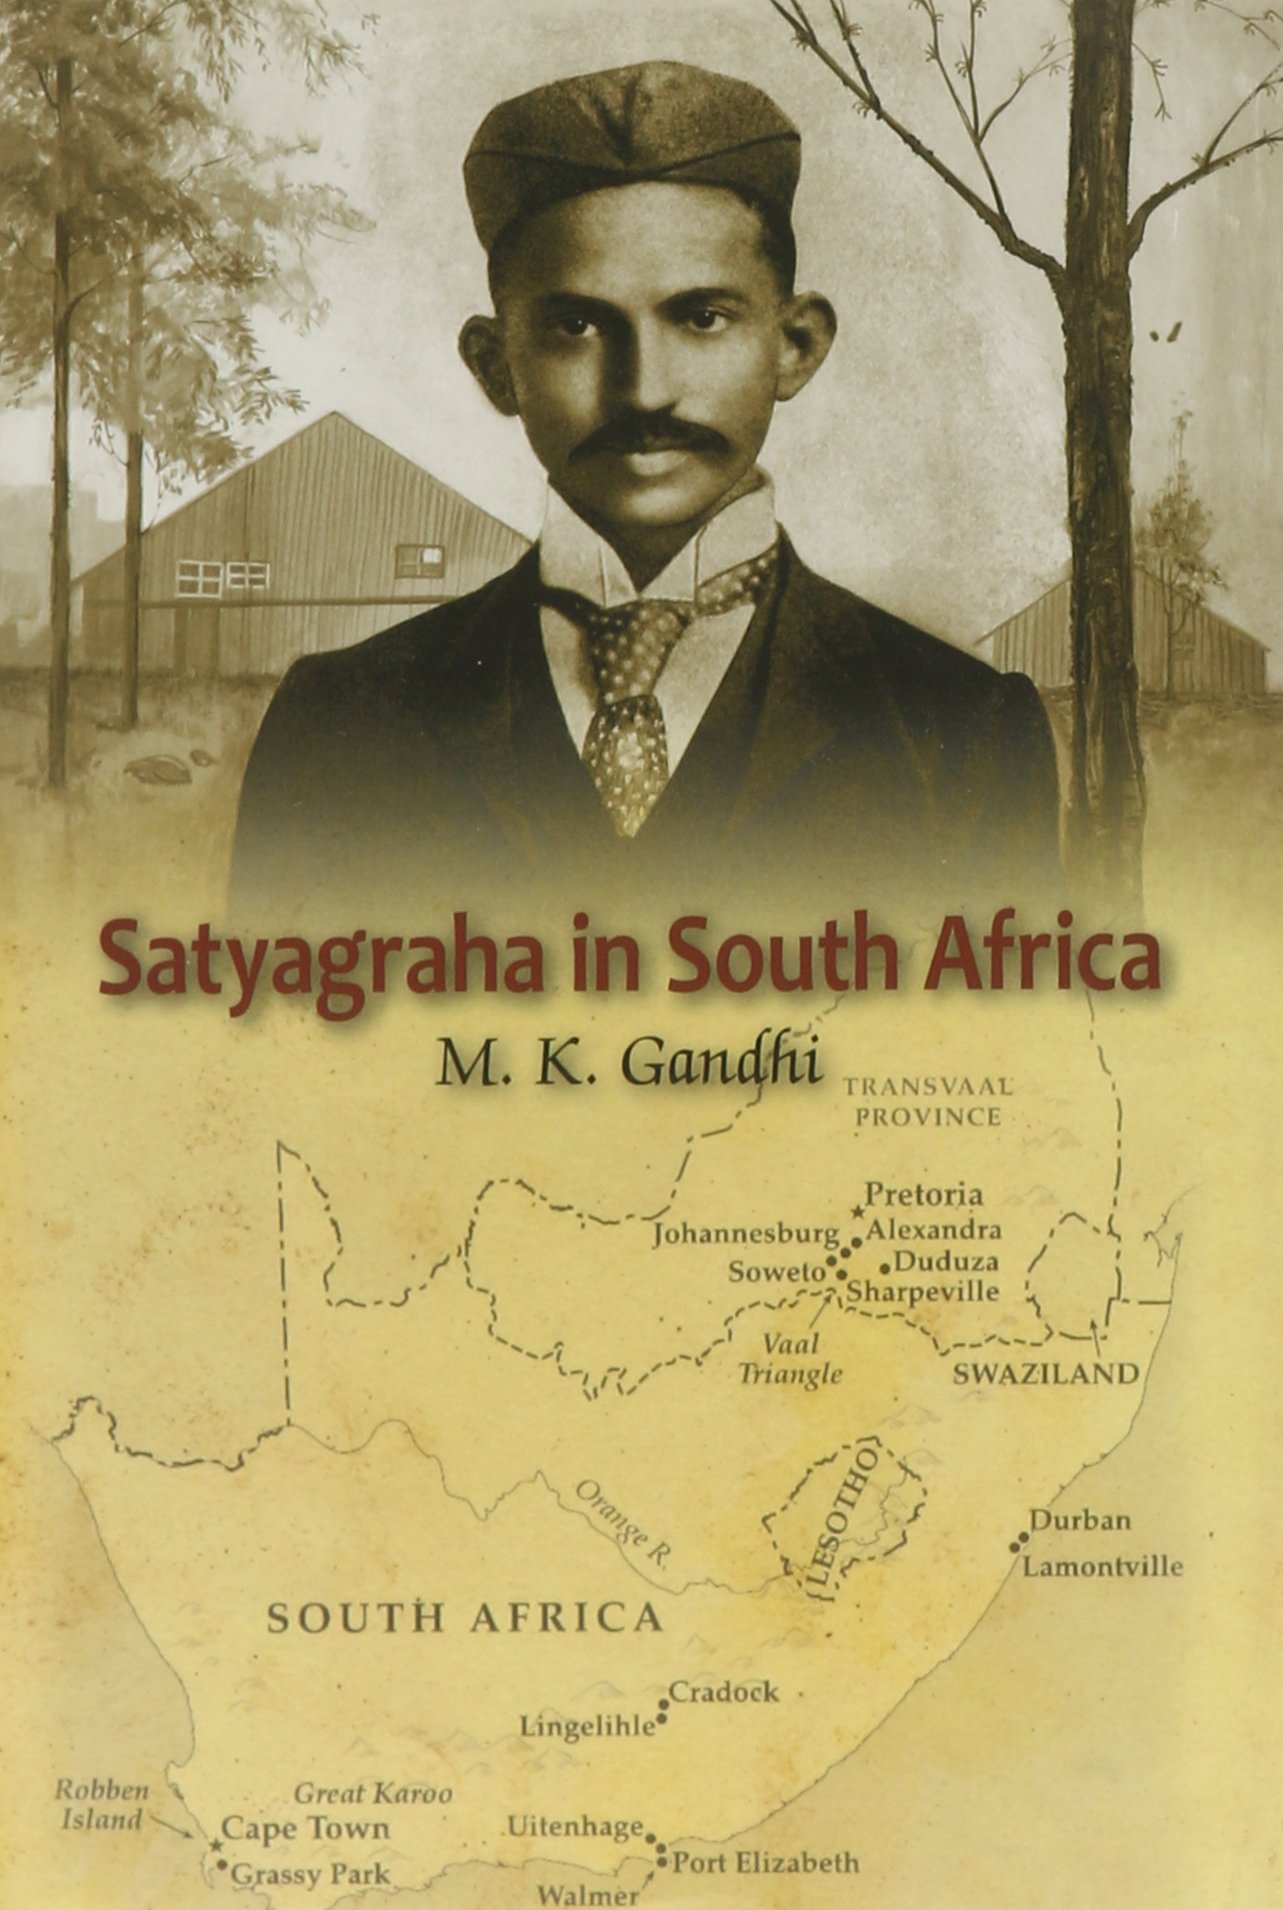 Mahatma Gandhi First Satyagraha in South Africa